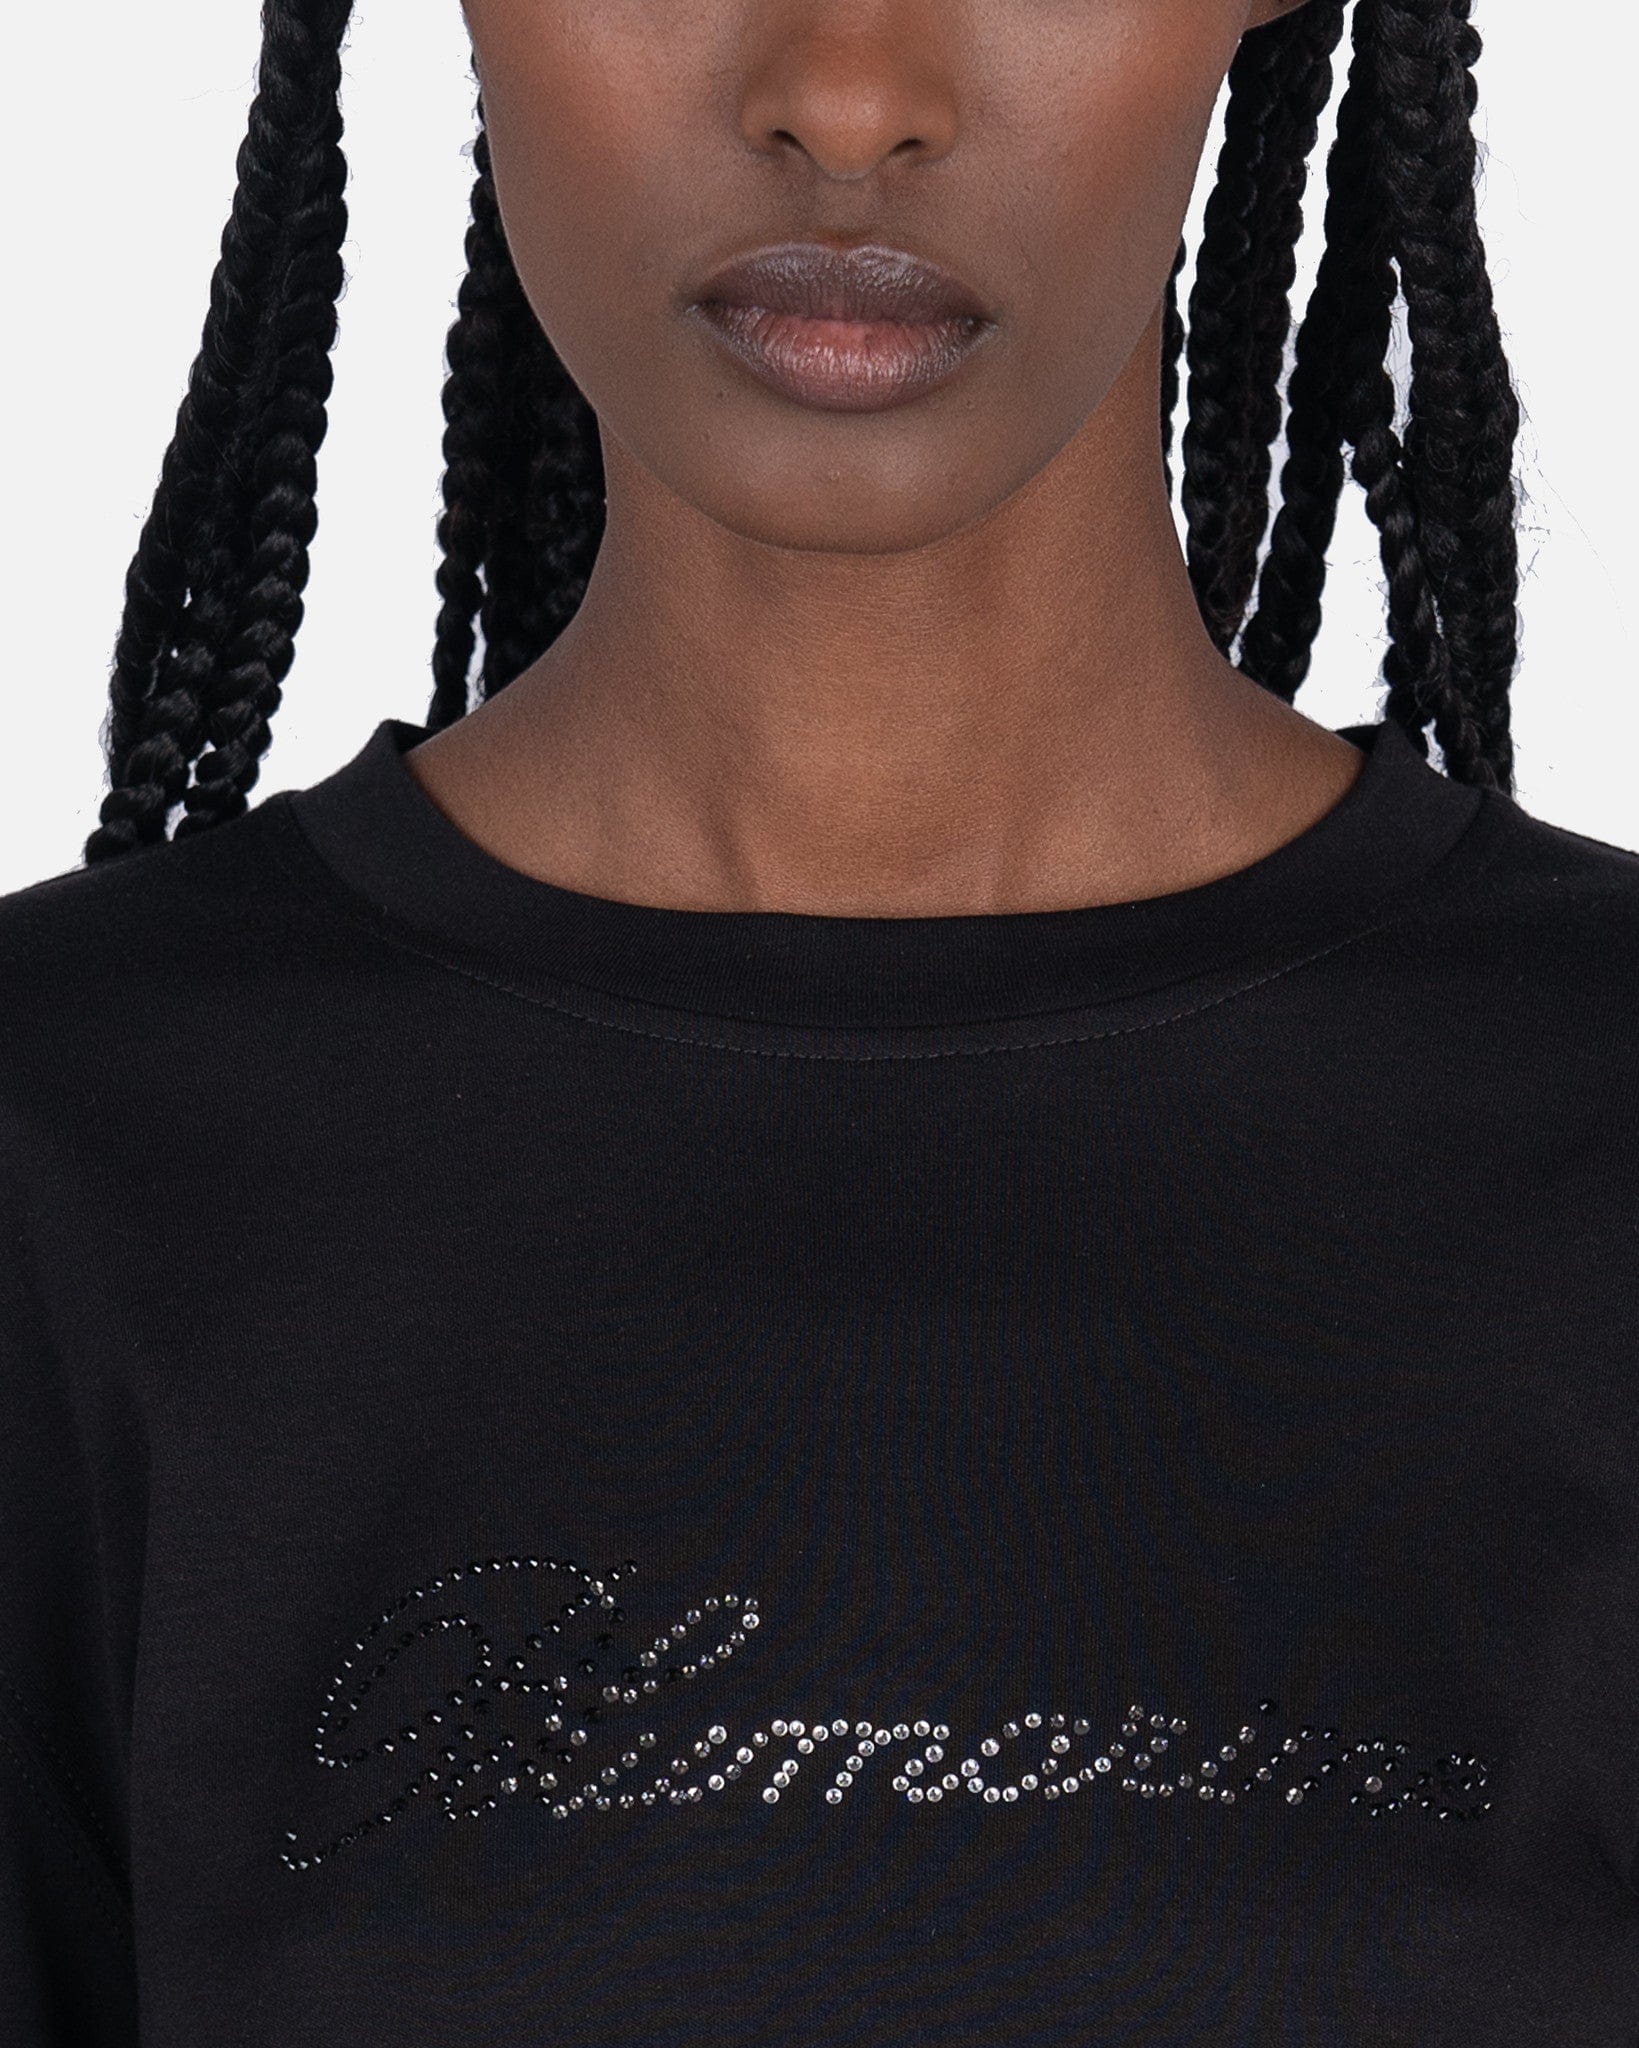 Blumarine Women T-Shirts Long Sleeve T-Shirt with Embroidery Rhinestone in Black